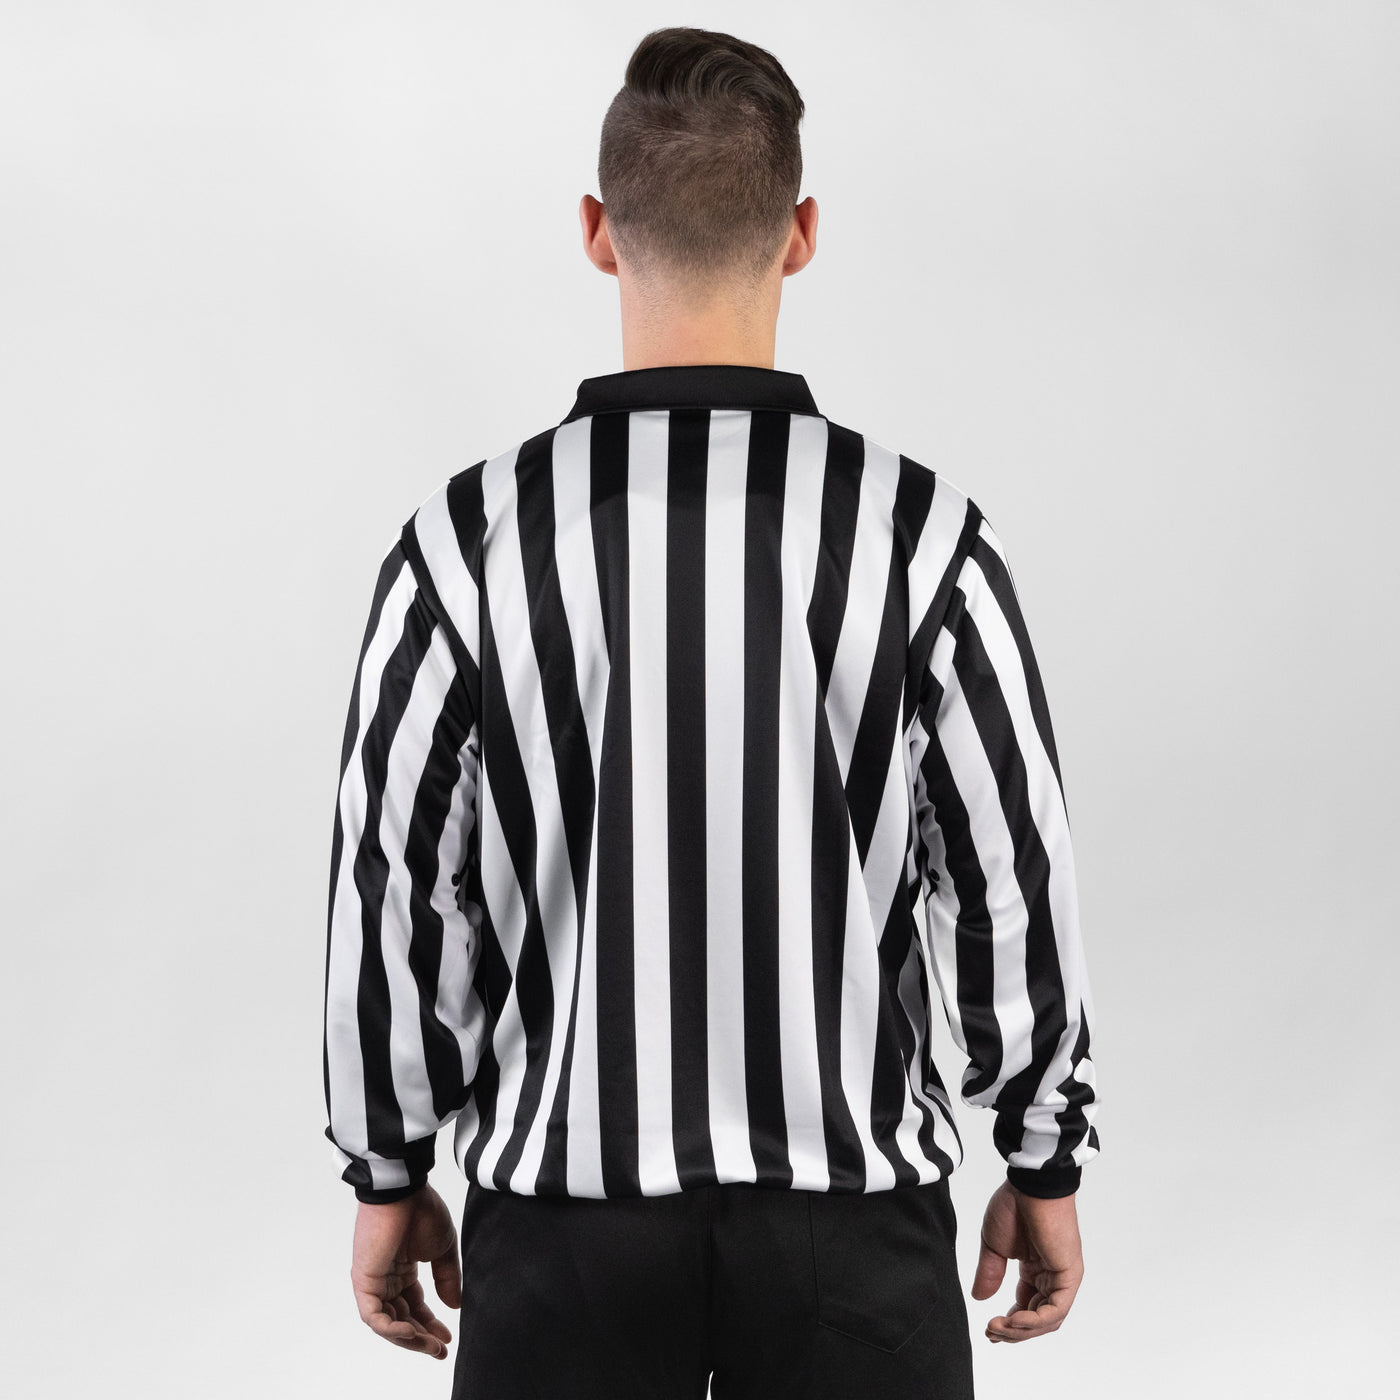 Zebrasclub ZL1 hockey referee jersey with snaps back view